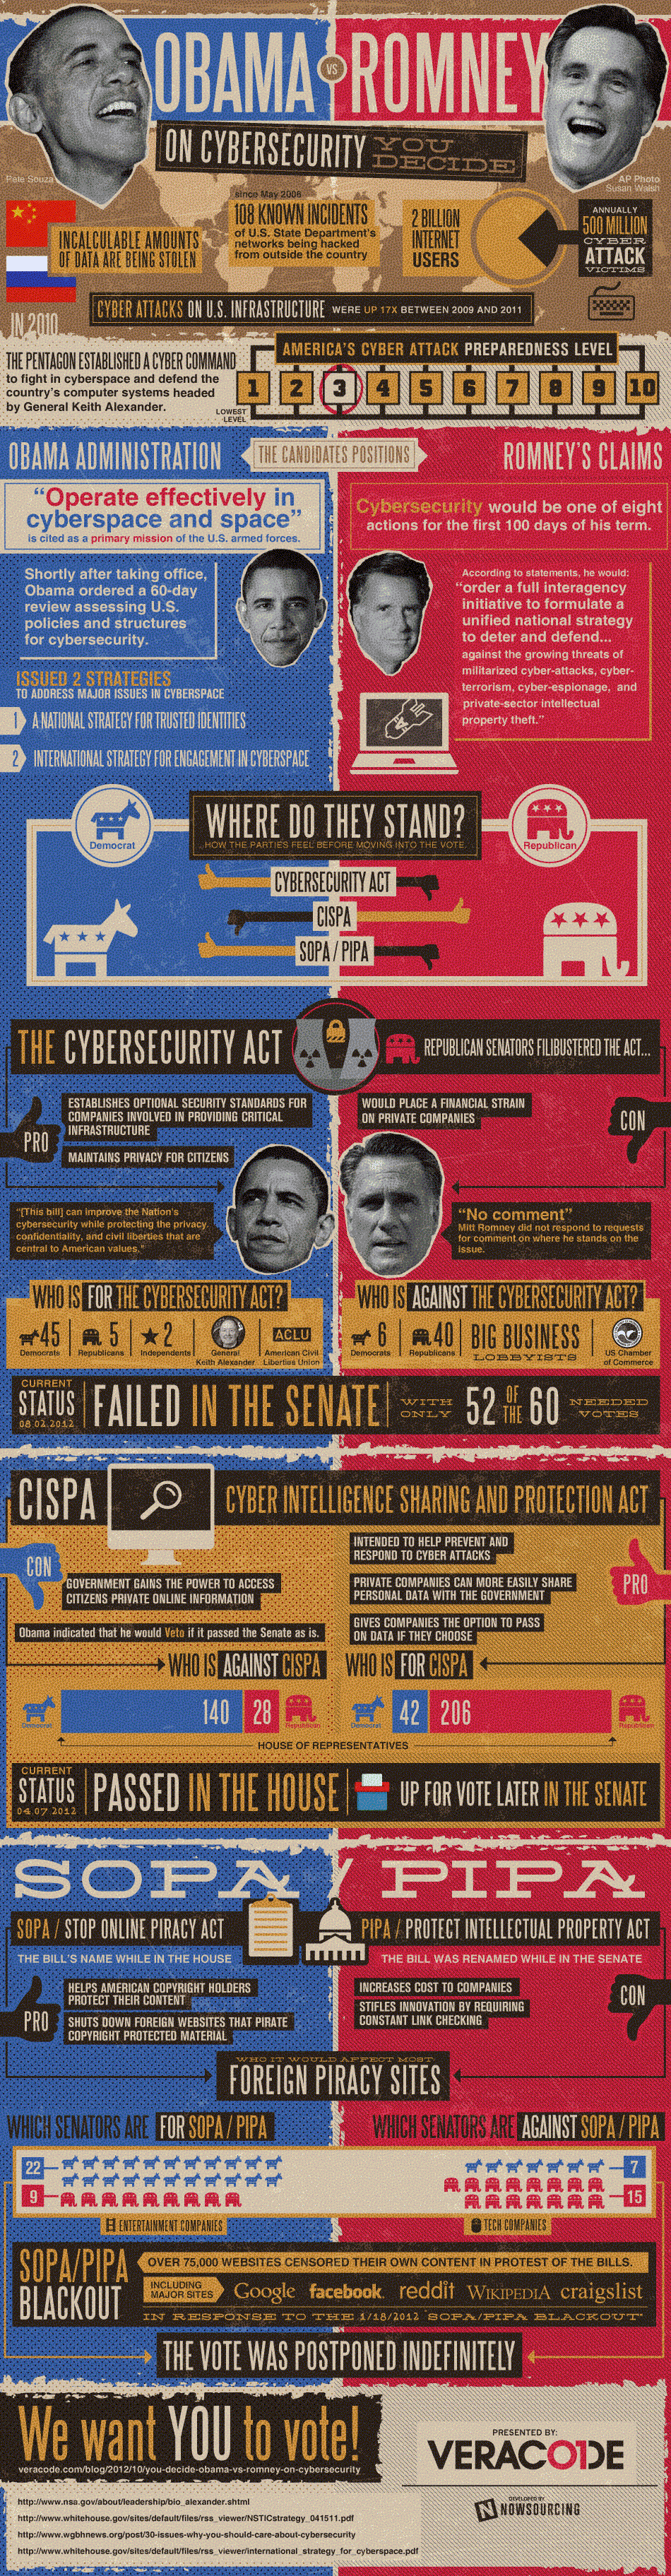 cybersecurity-obama-vs-romney-infographic